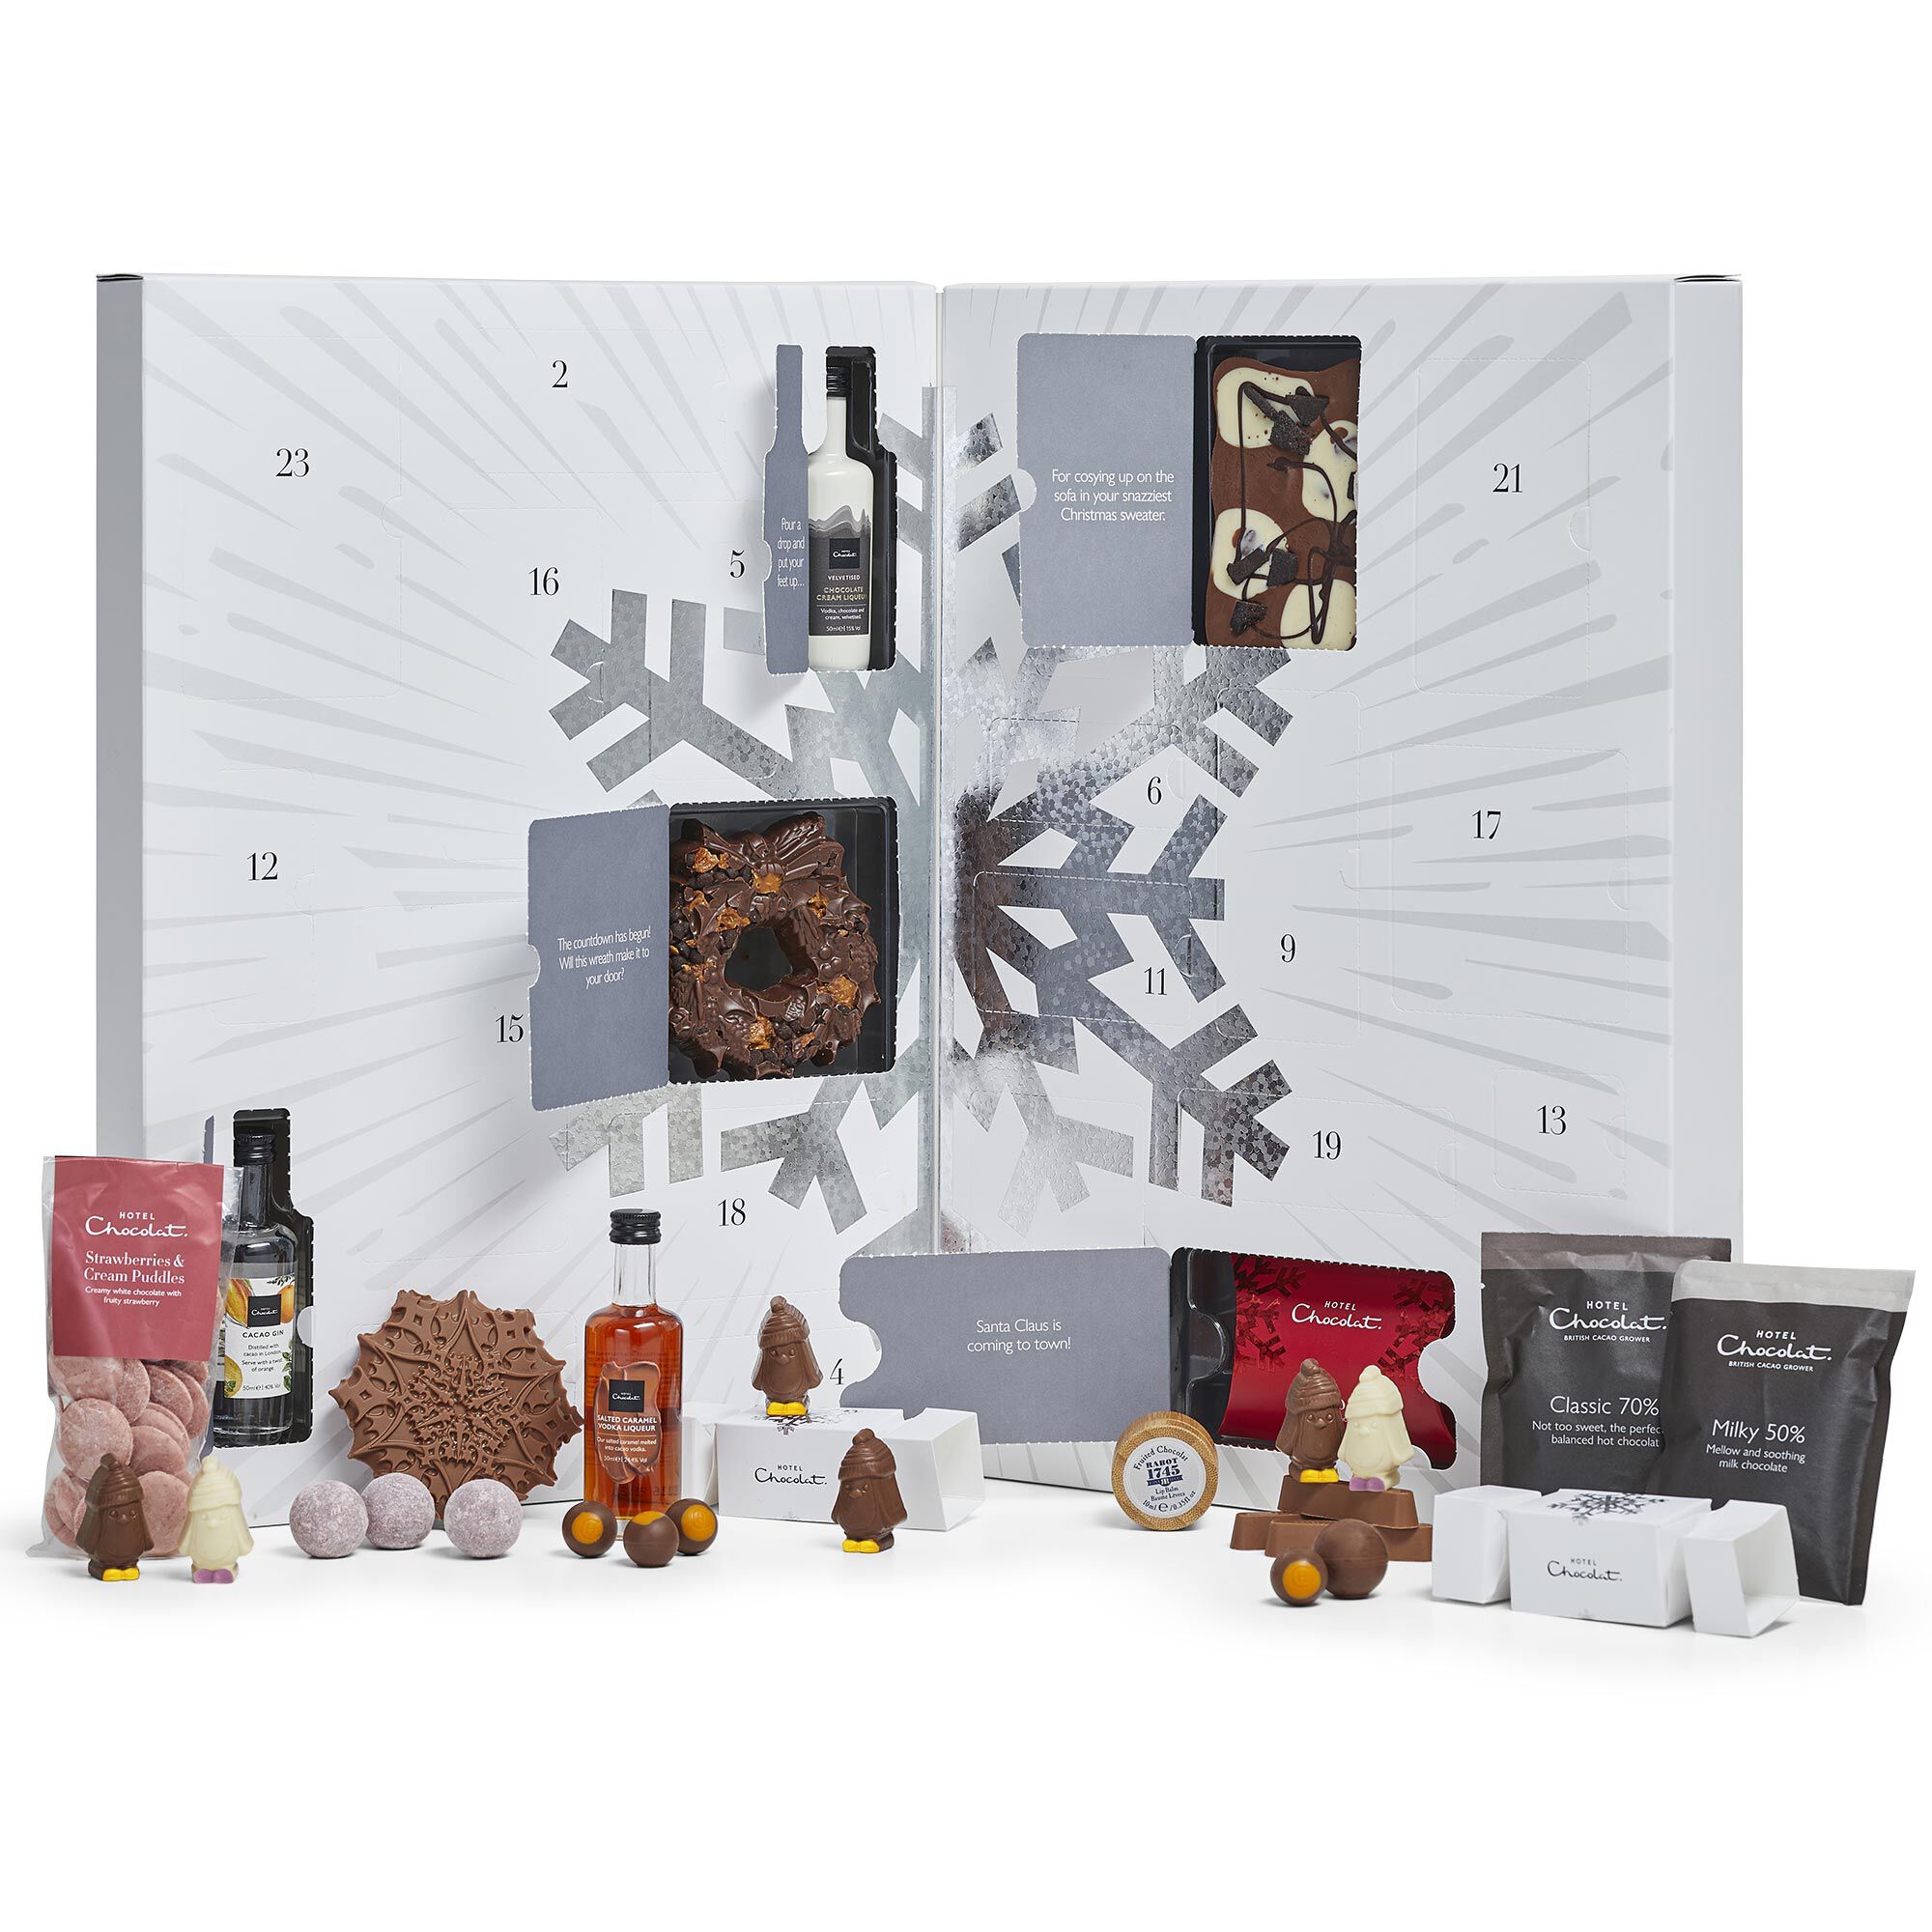 The Grand Advent Calendar Hotel Chocolat